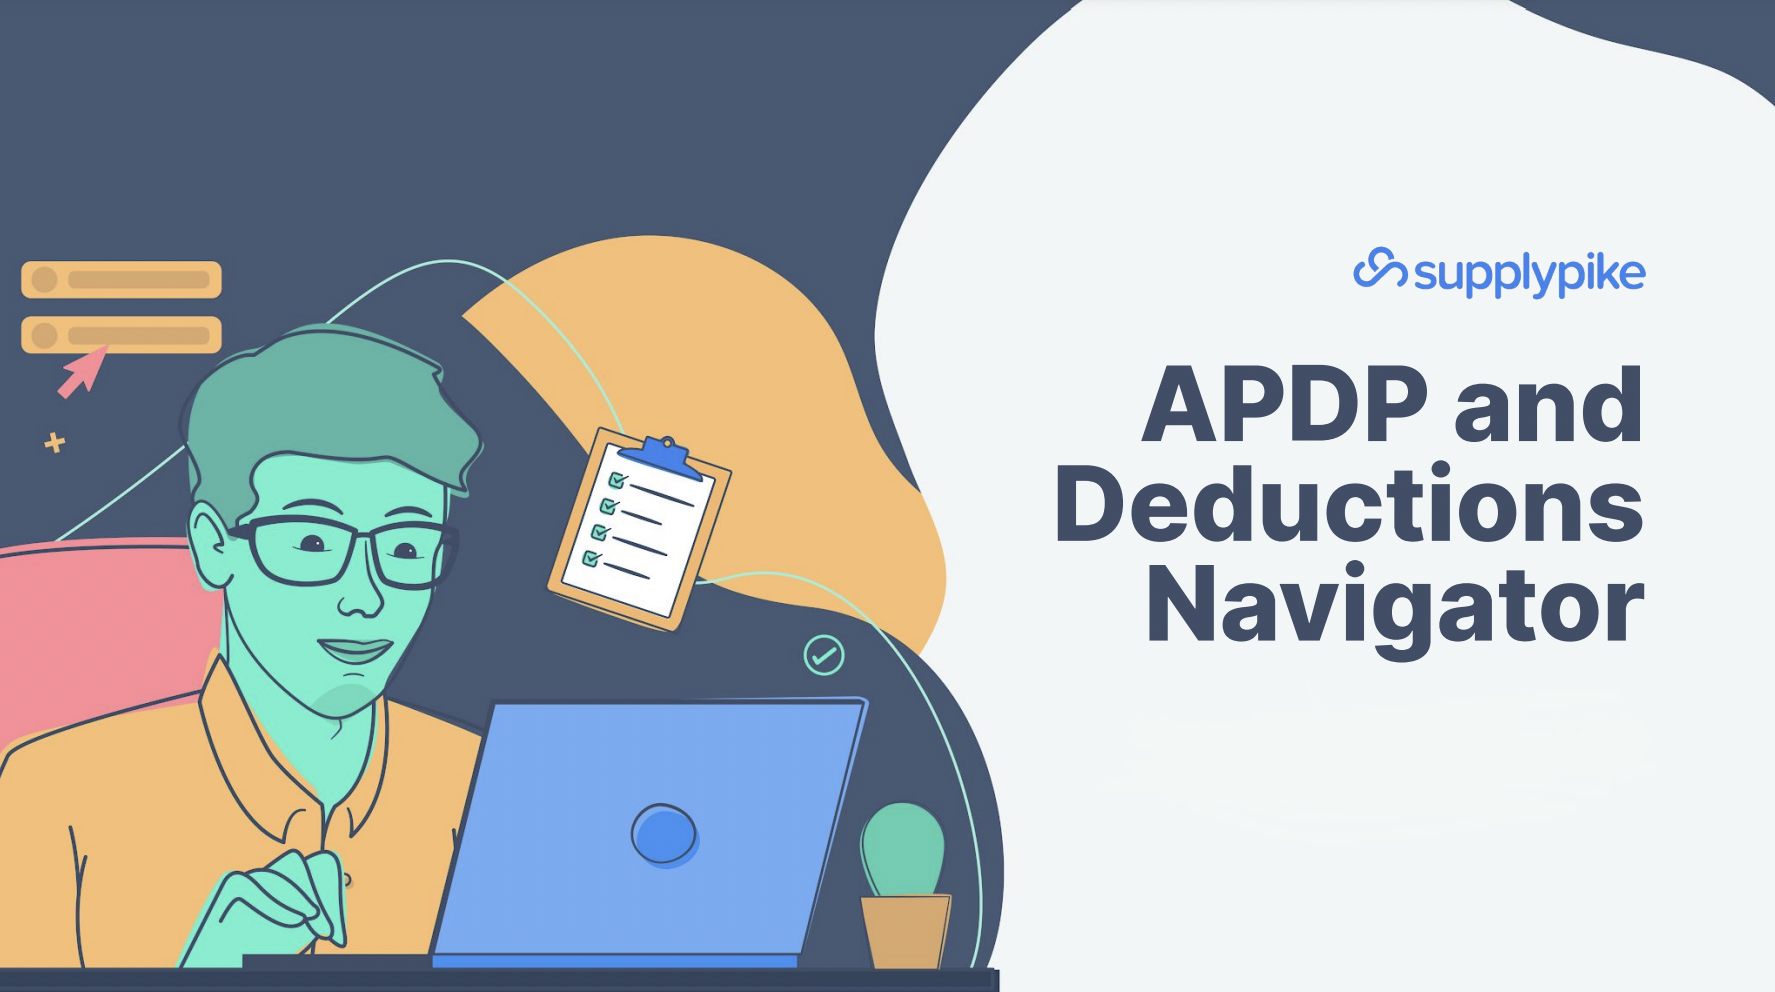 Deductions Navigator and APDP